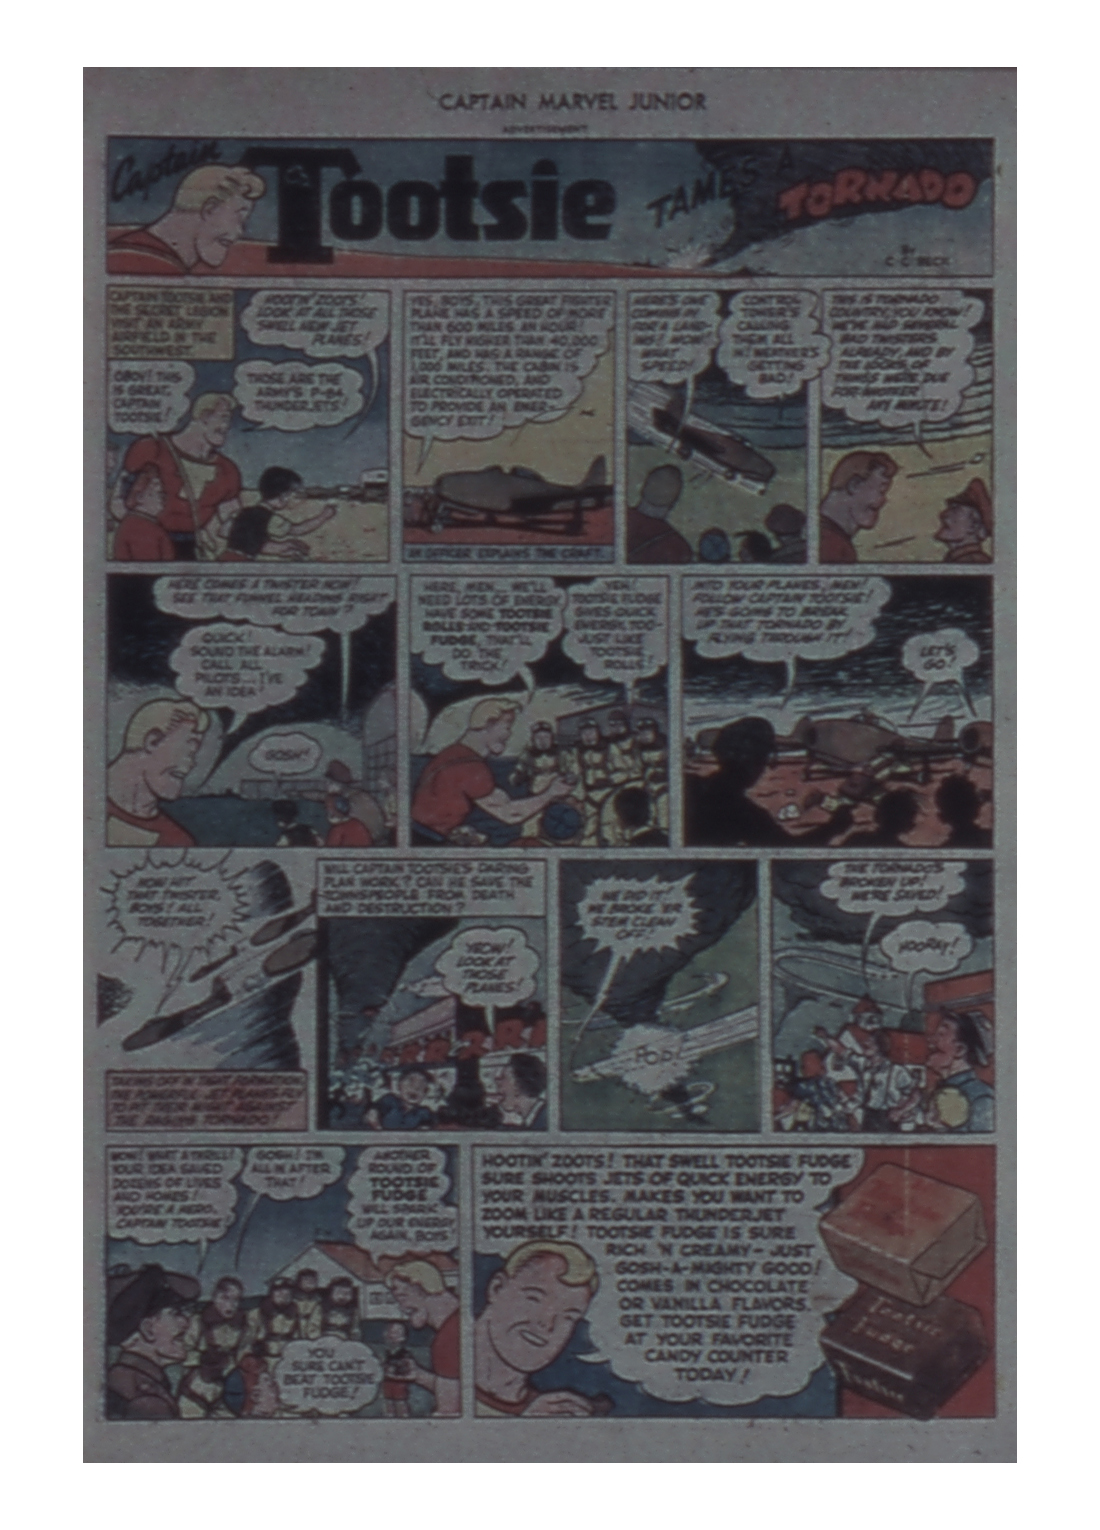 Read online Captain Marvel, Jr. comic -  Issue #63 - 15